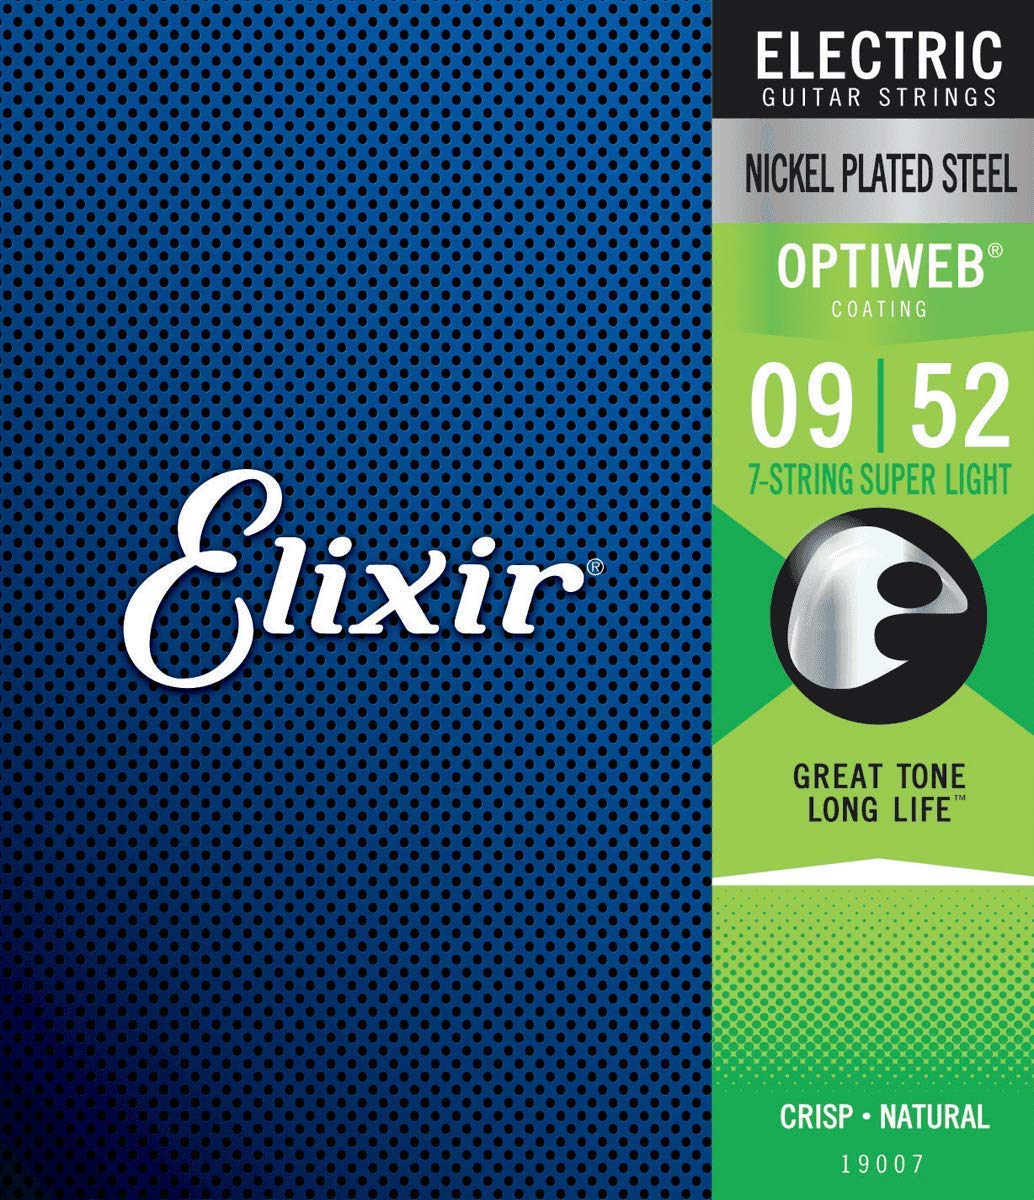 Струны для электрогитары Elixir 19007 Optiweb Nickel Plated Steel 7-String Super Light 9/52